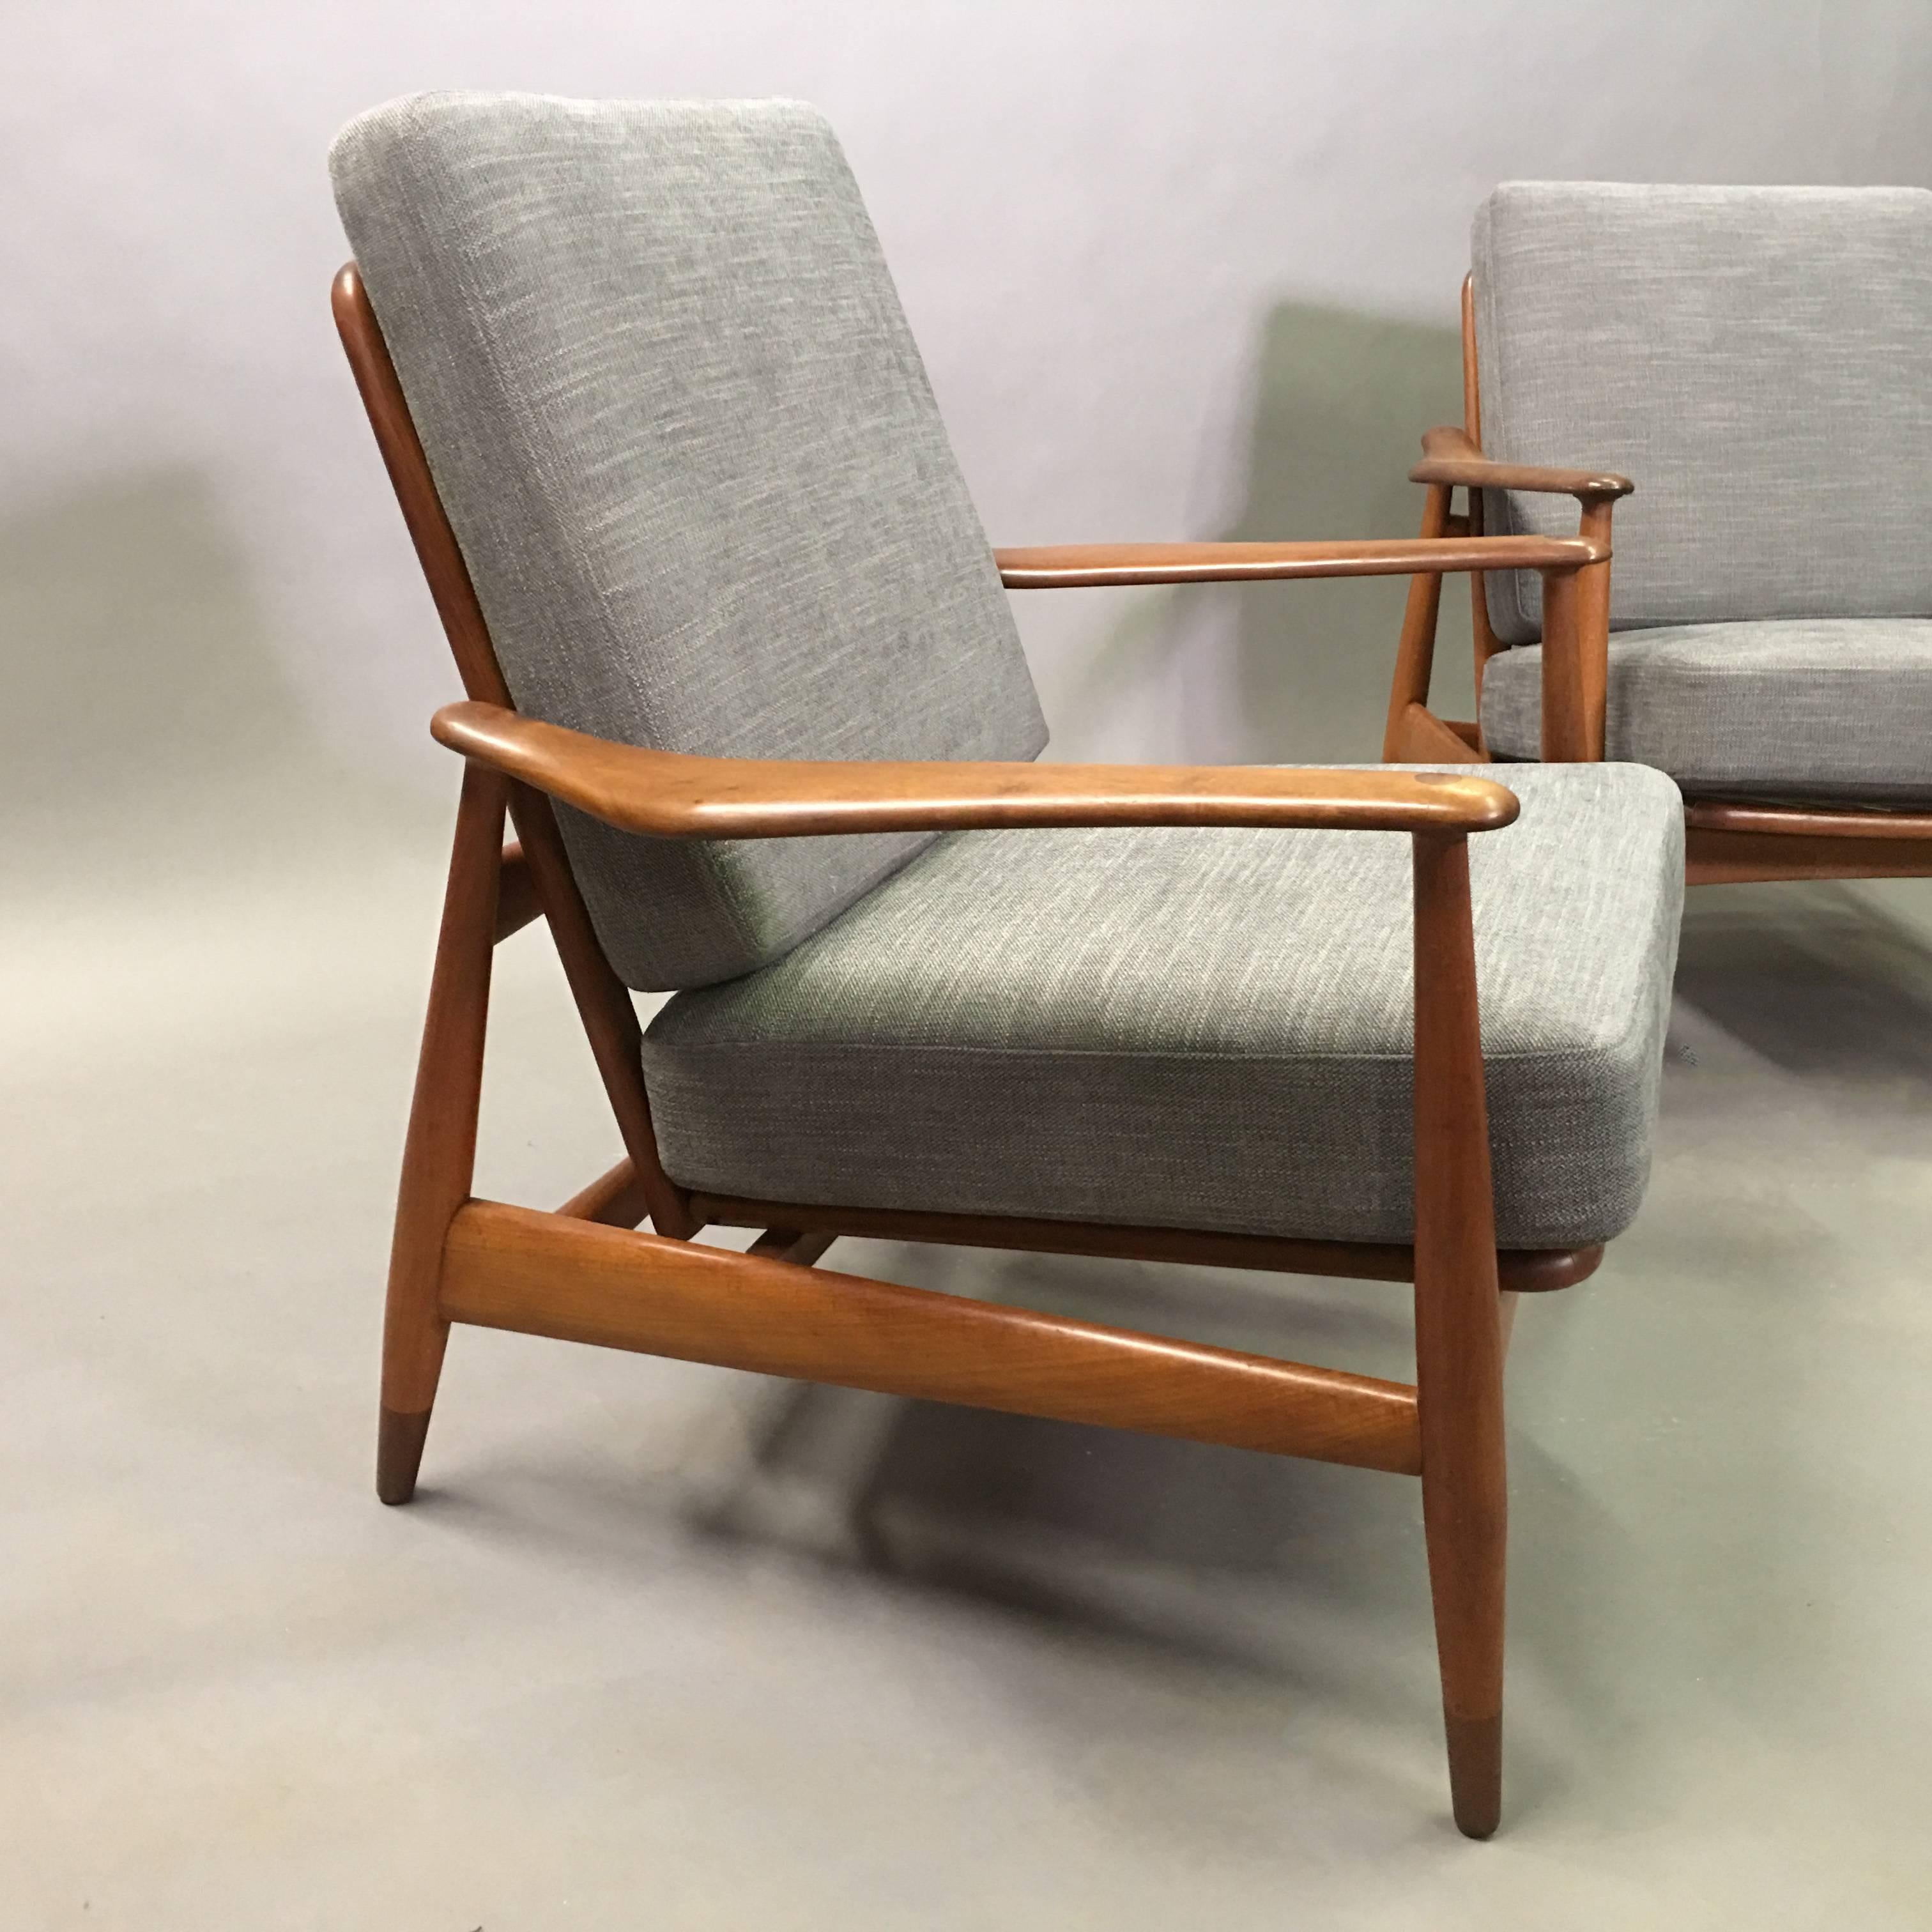 Mid-20th Century Pair of Danish Modern Lounge Chairs by Finn Juhl for John Stuart